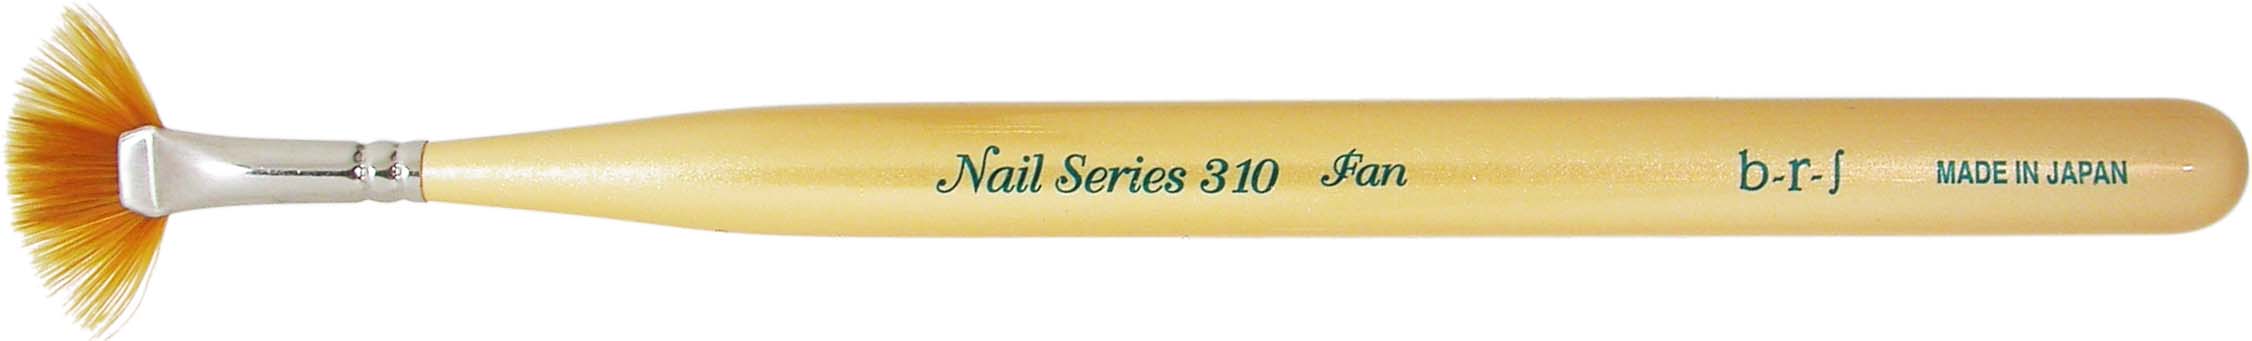 b-r-s Nail brushes-Artのラインナップ | USUI BRUSH株式会社(旧薄井興産)